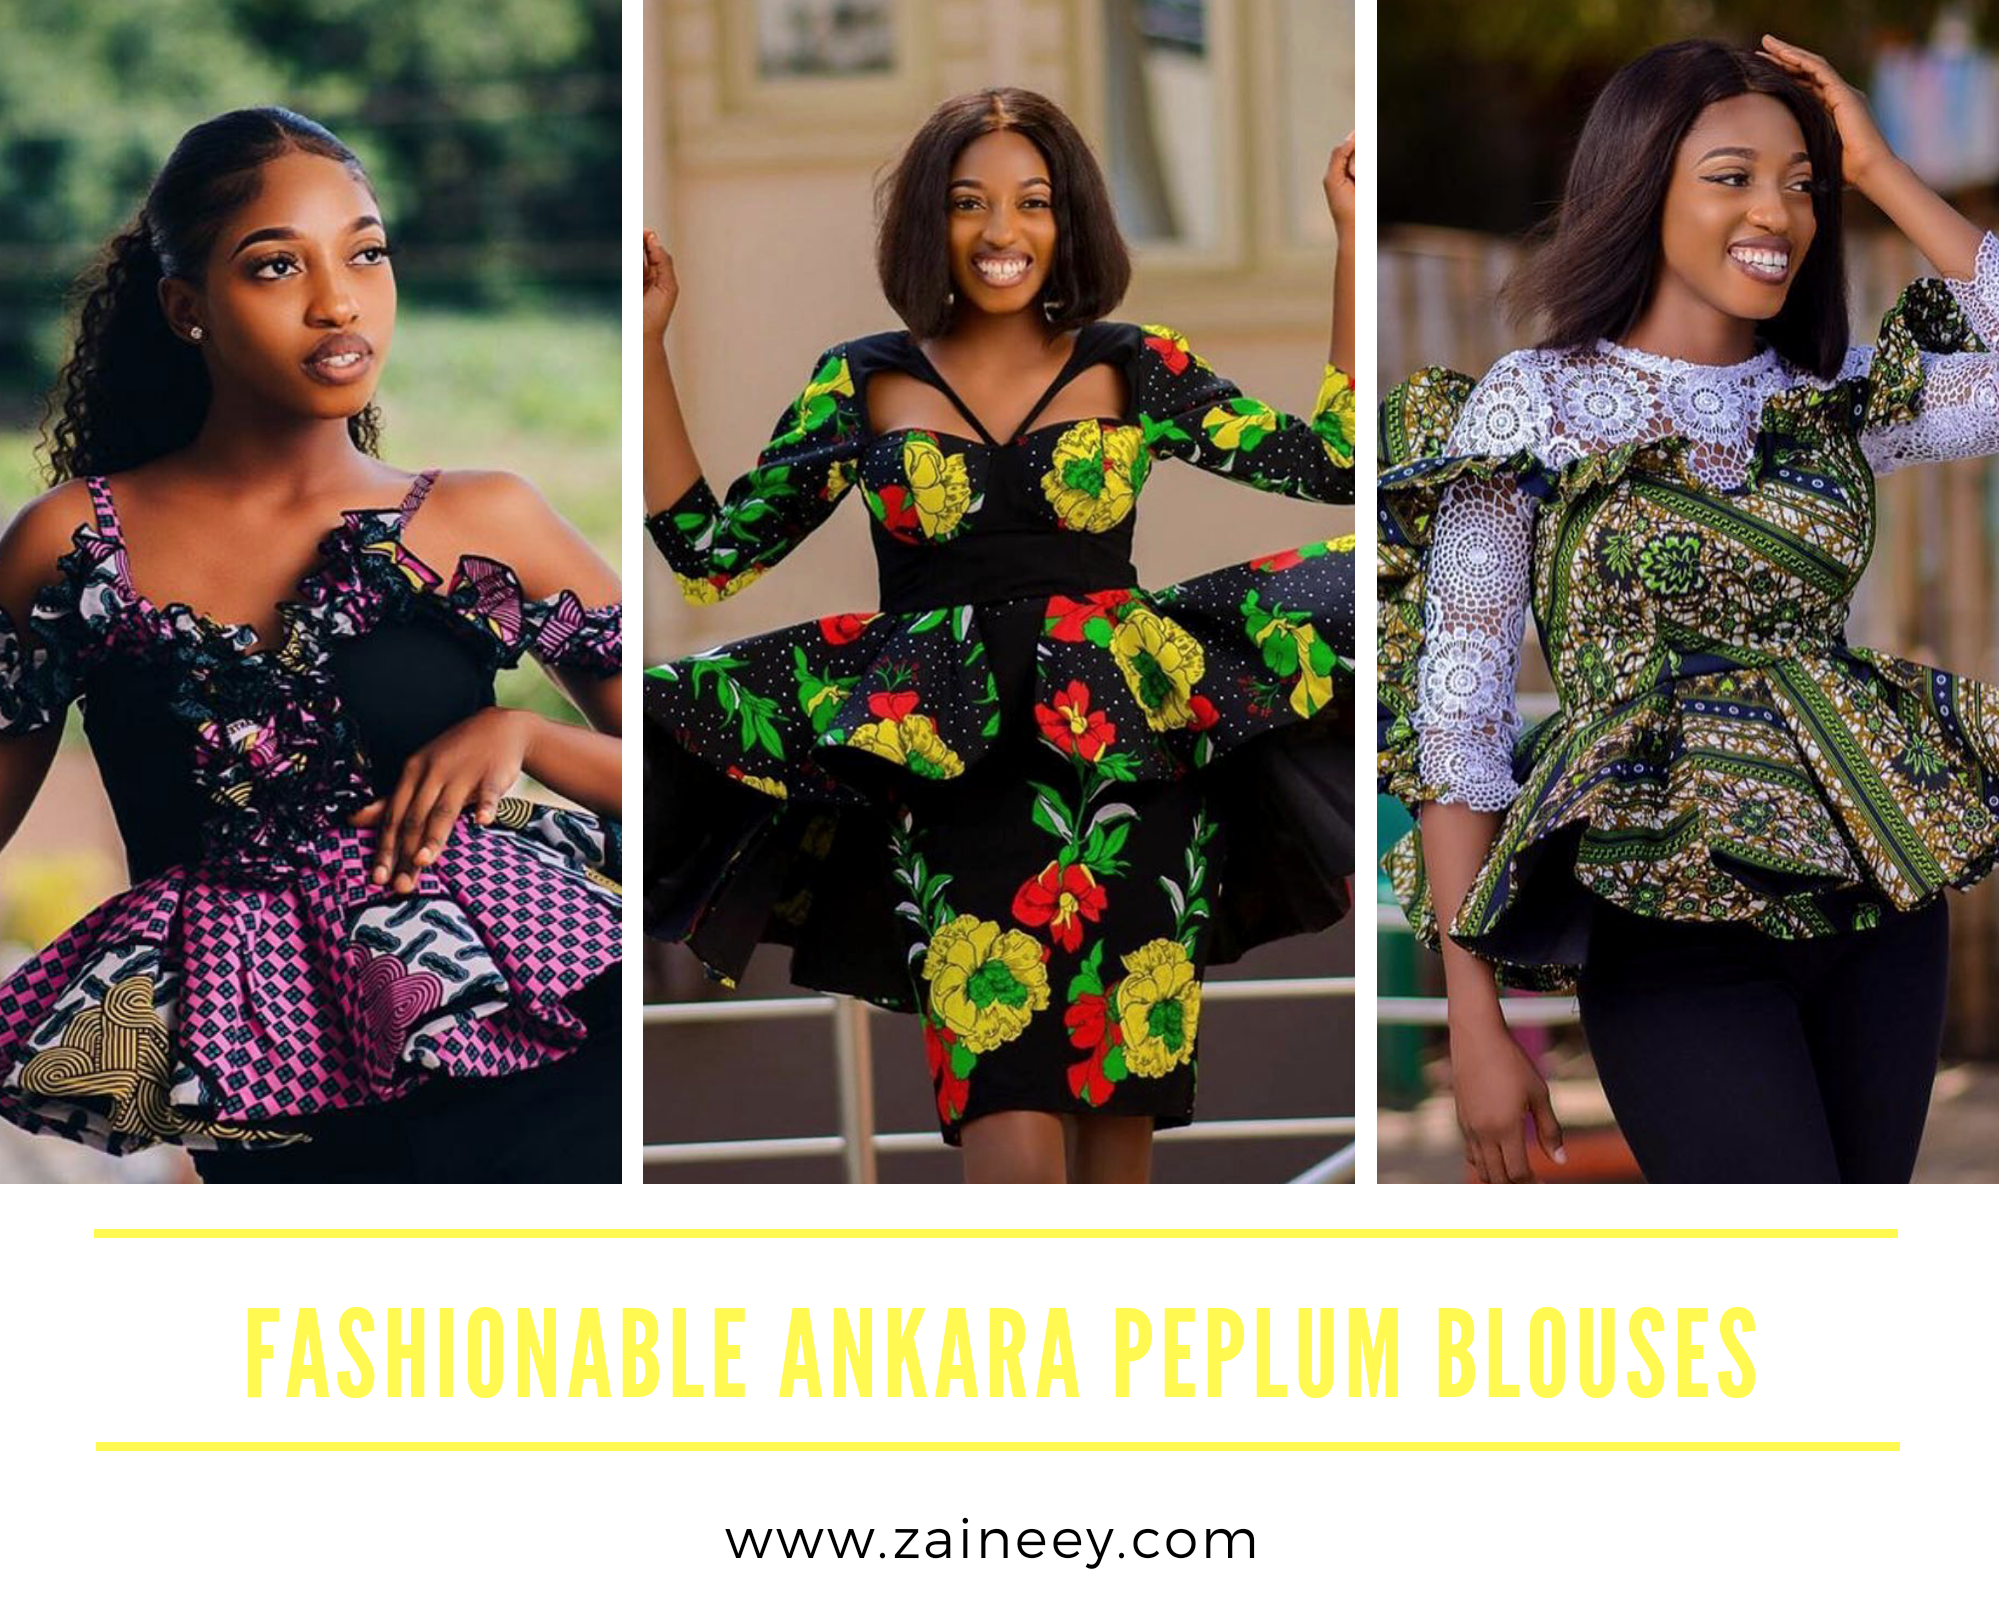 Ankara Peplum Blouse 2020: Beautiful and Fashionable Ankara Peplum Blouse for Elegant Ladies